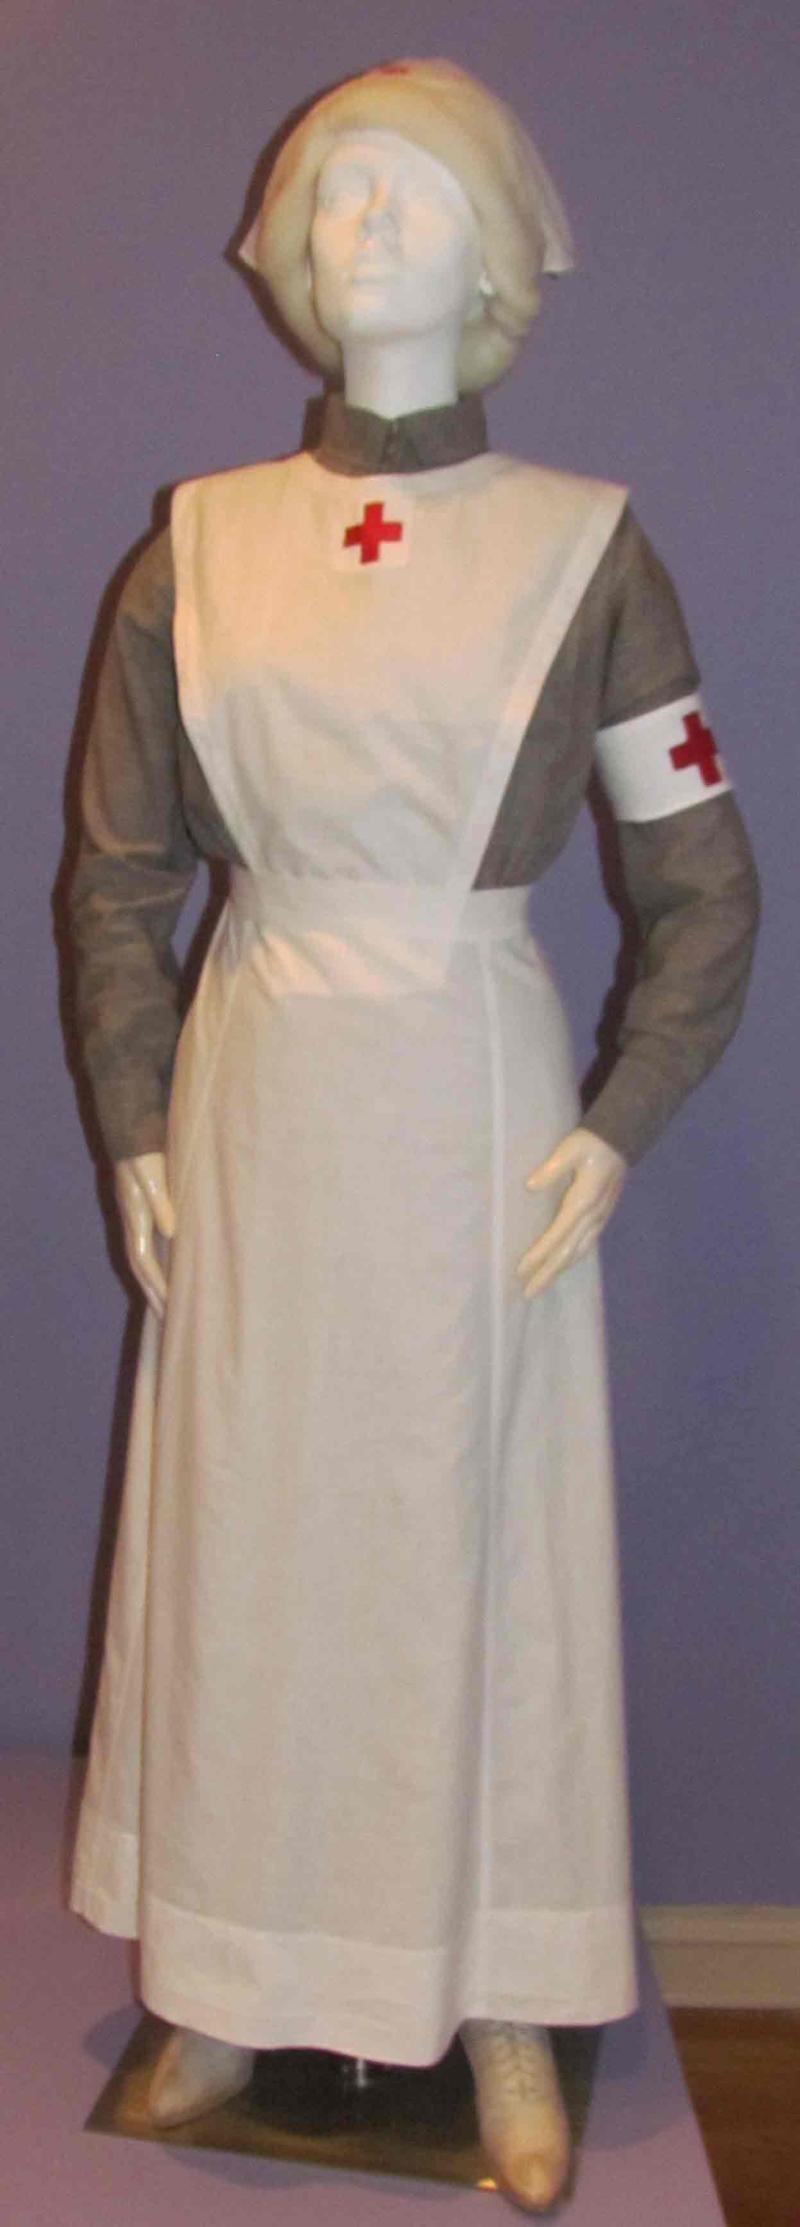 Plus Cut Out Binding Trim Nurse Costume With Thong & Headwear